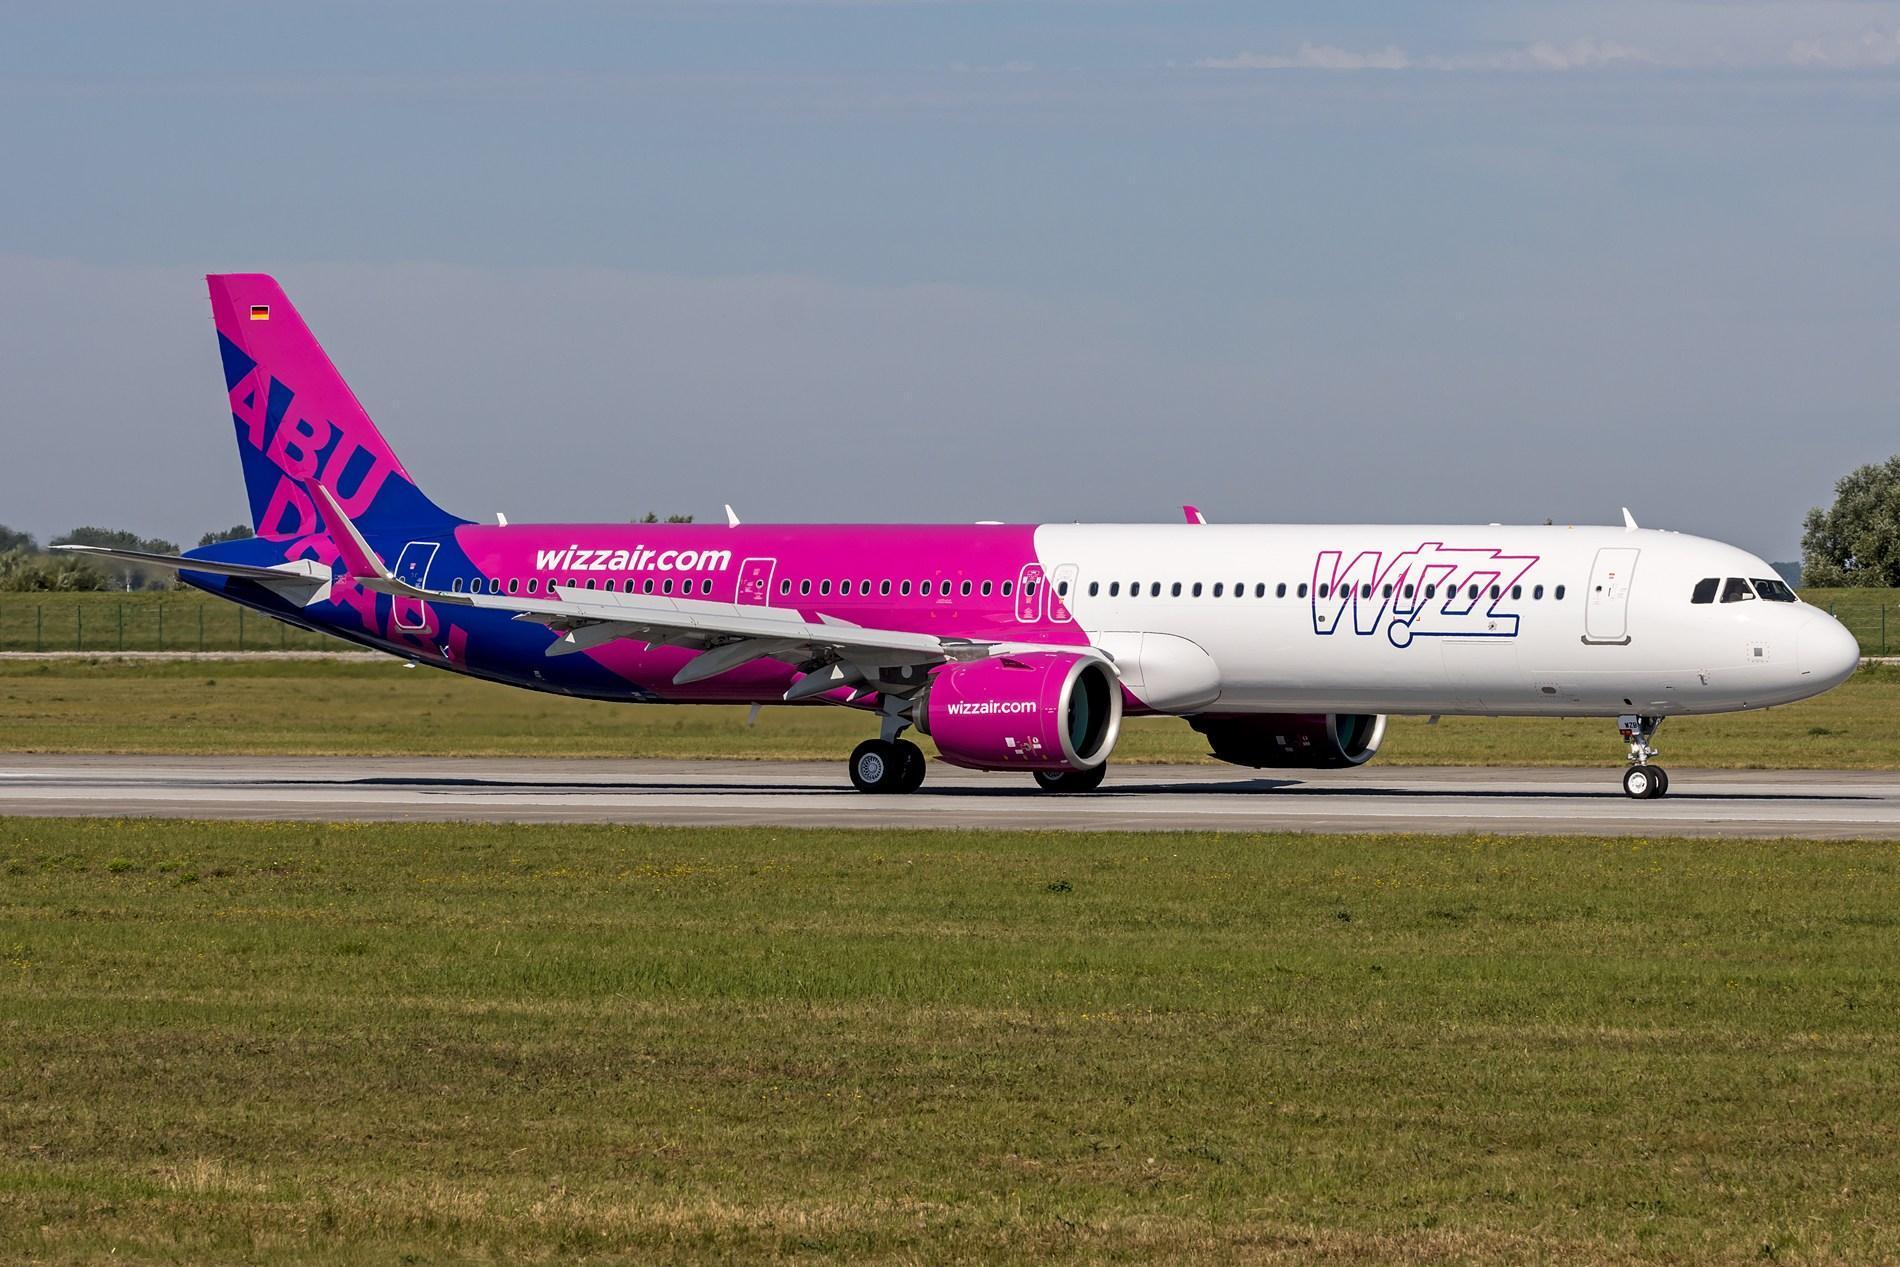 Setbacks Behind it, Wizz Air Abu Dhabi to Launch on Jan. 15